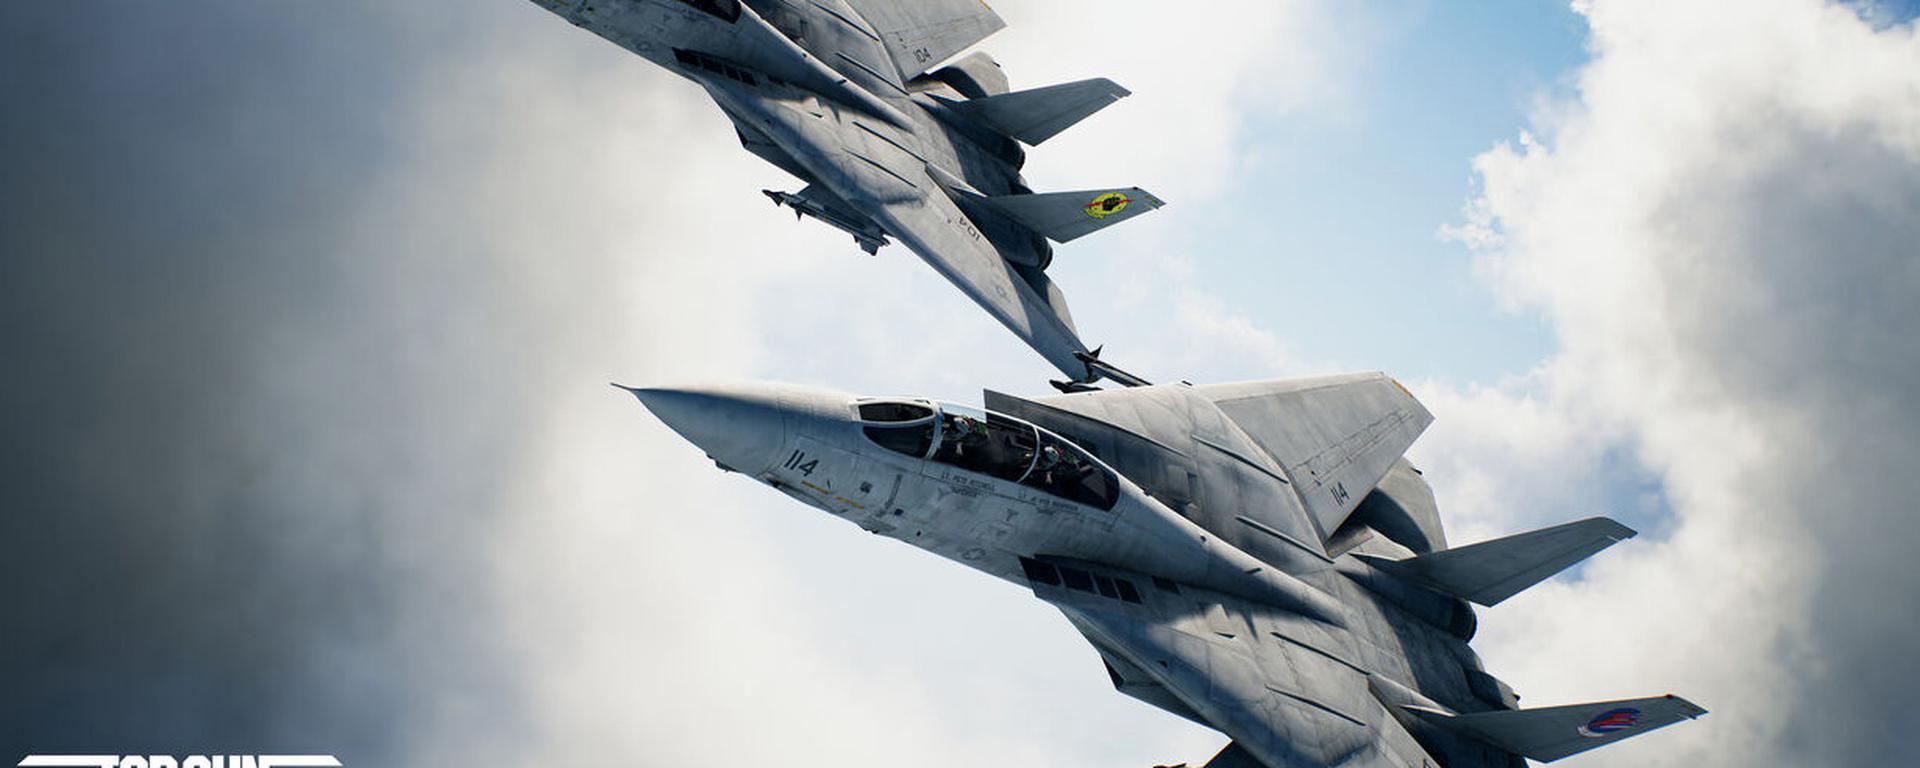 Ace Combat 7 Top Gun Maverick - REVIEW: volar como el capitán ‘Maverick’ ya es una realidad